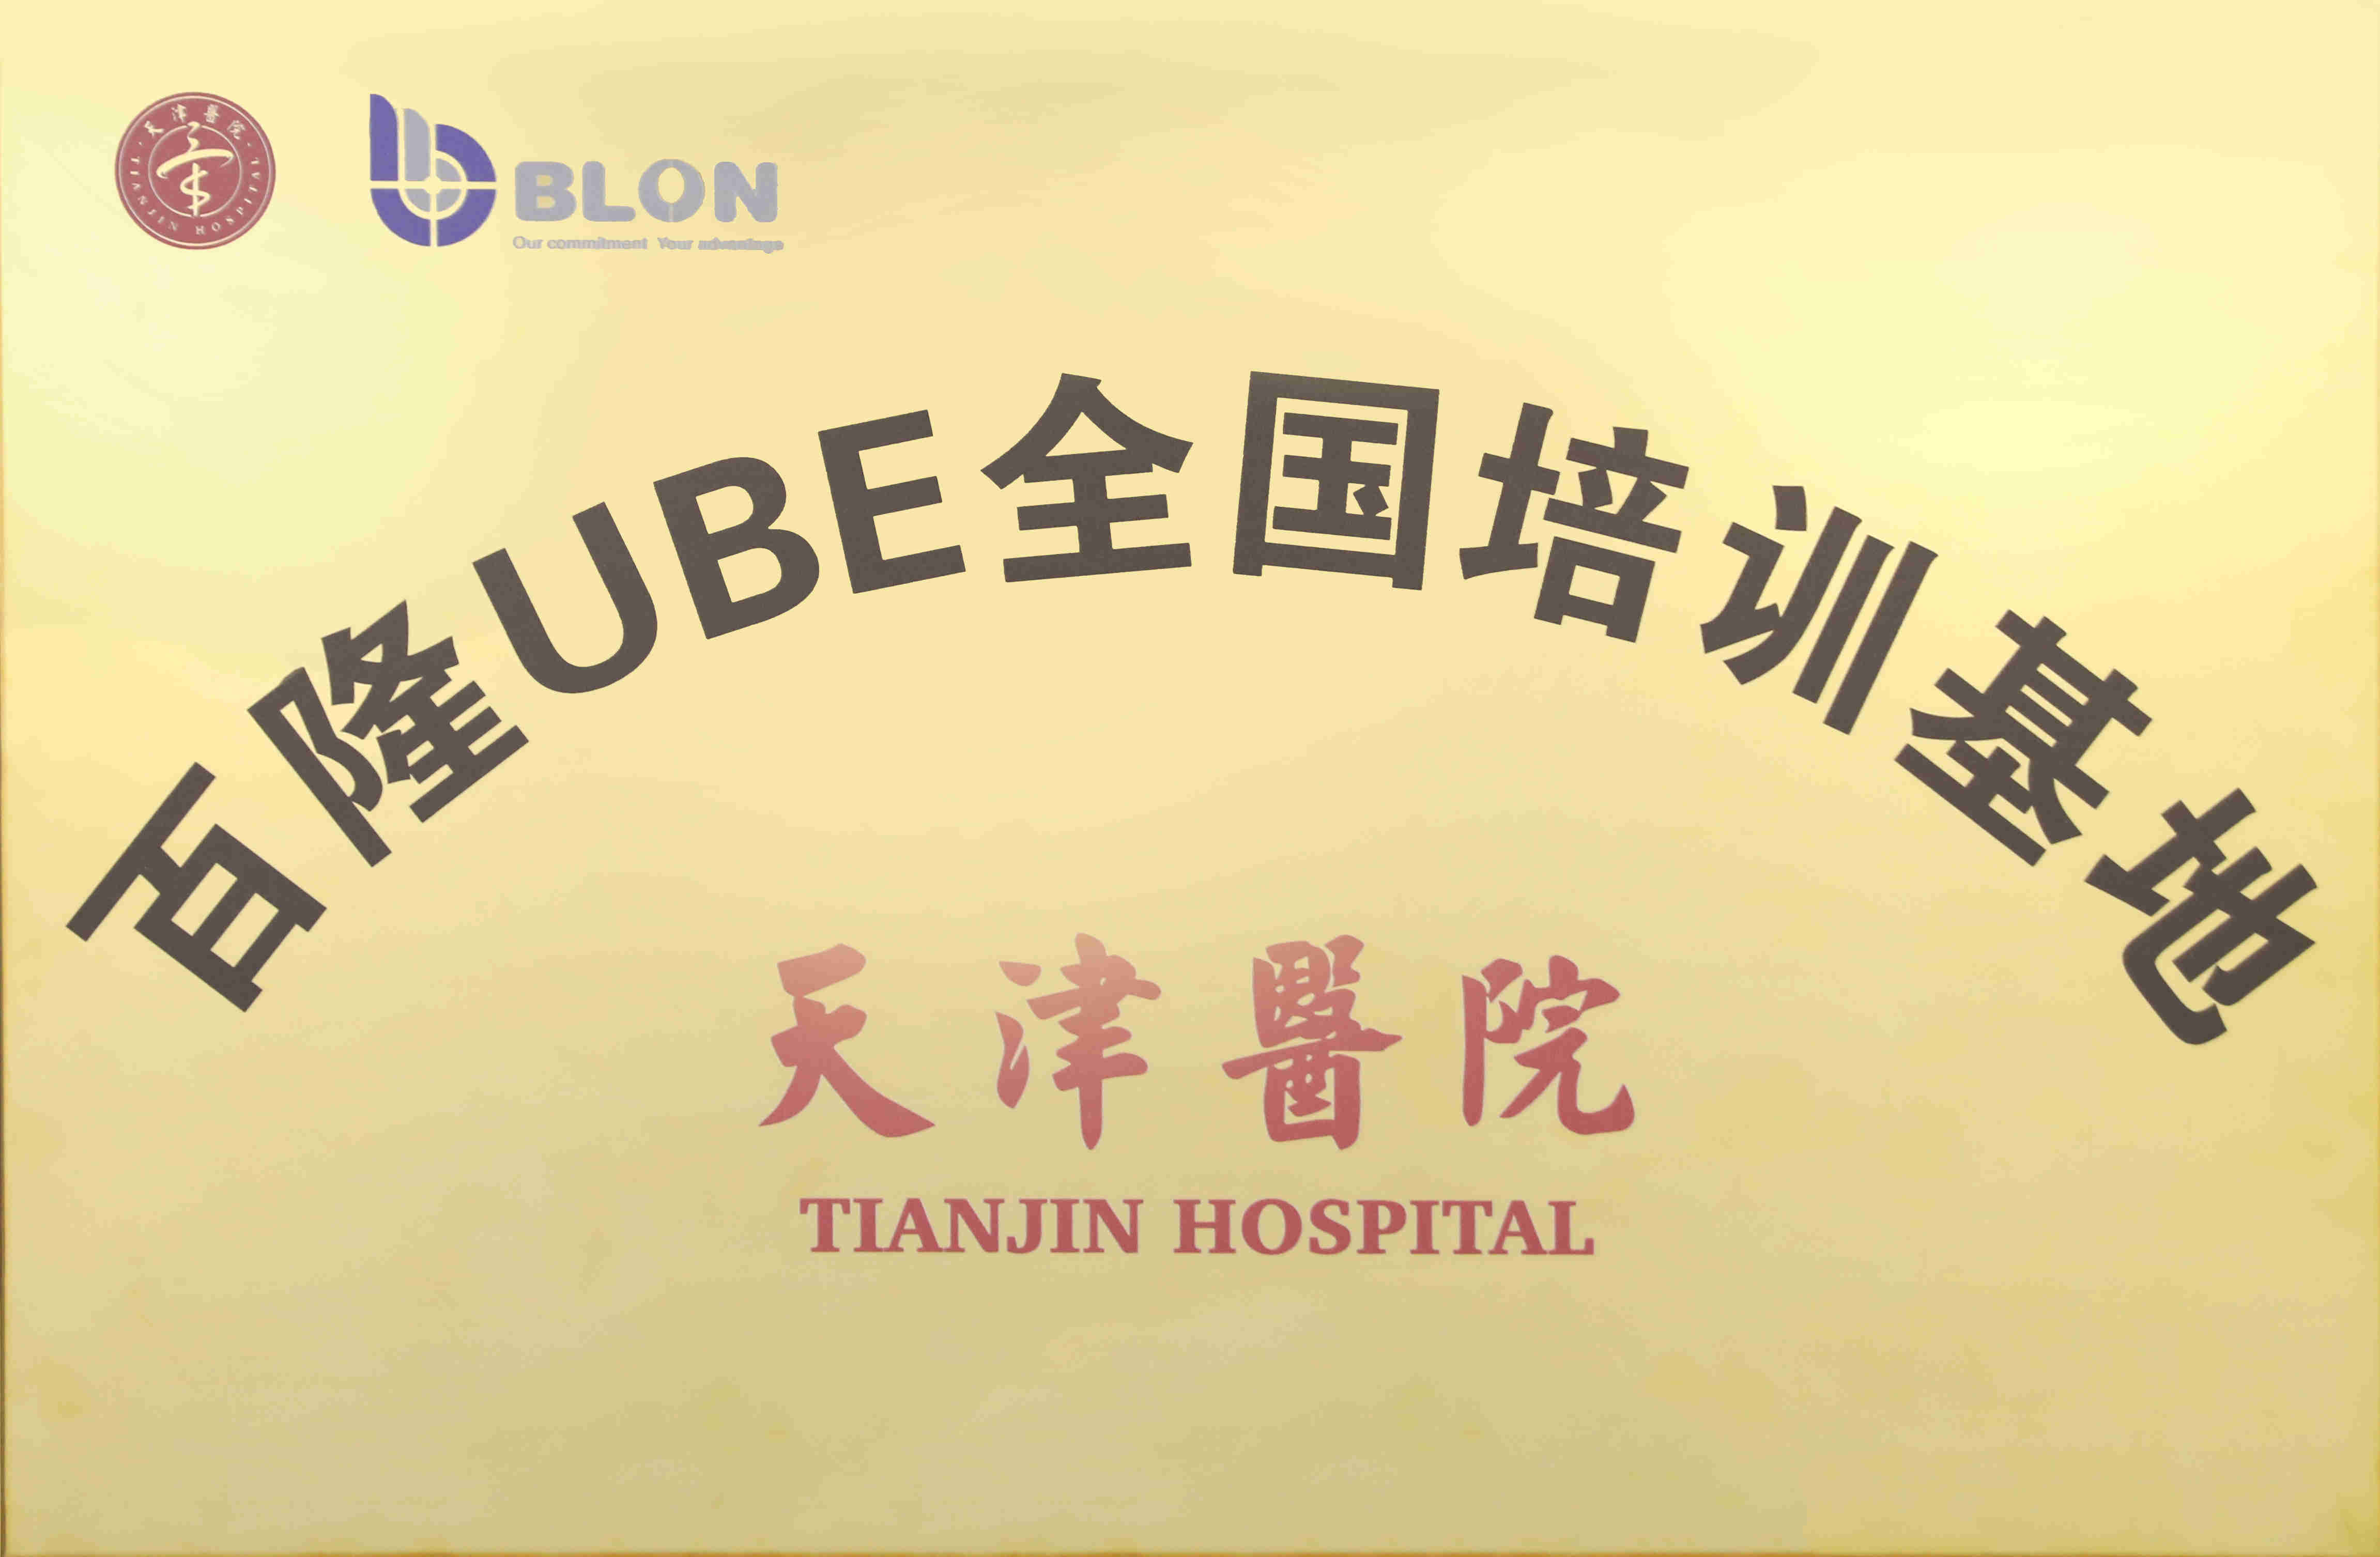 Tianjin hospital training base